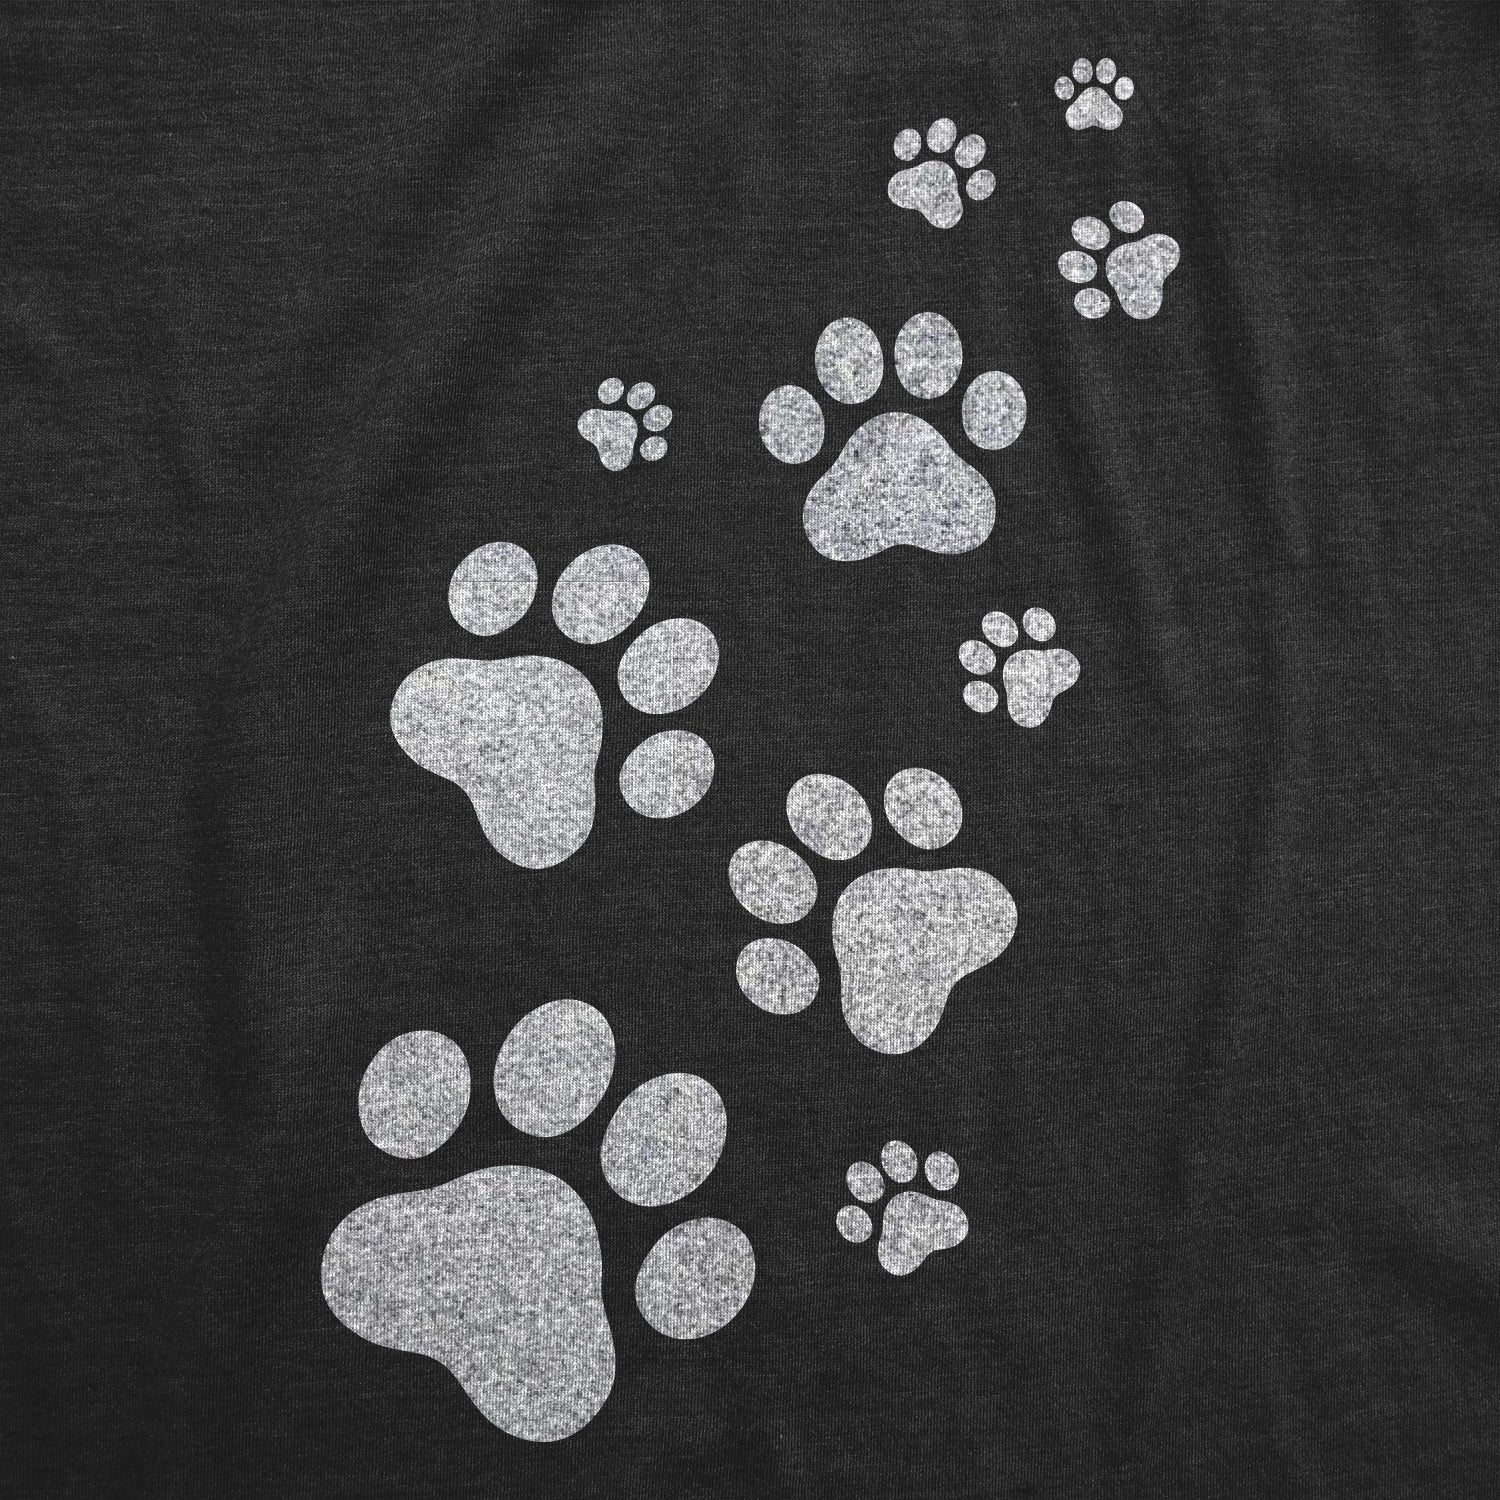 Funny Heather Black - Glitter Cat Paw Glitter Cat Paw Prints Womens T Shirt Nerdy Mother's Day Cat Tee